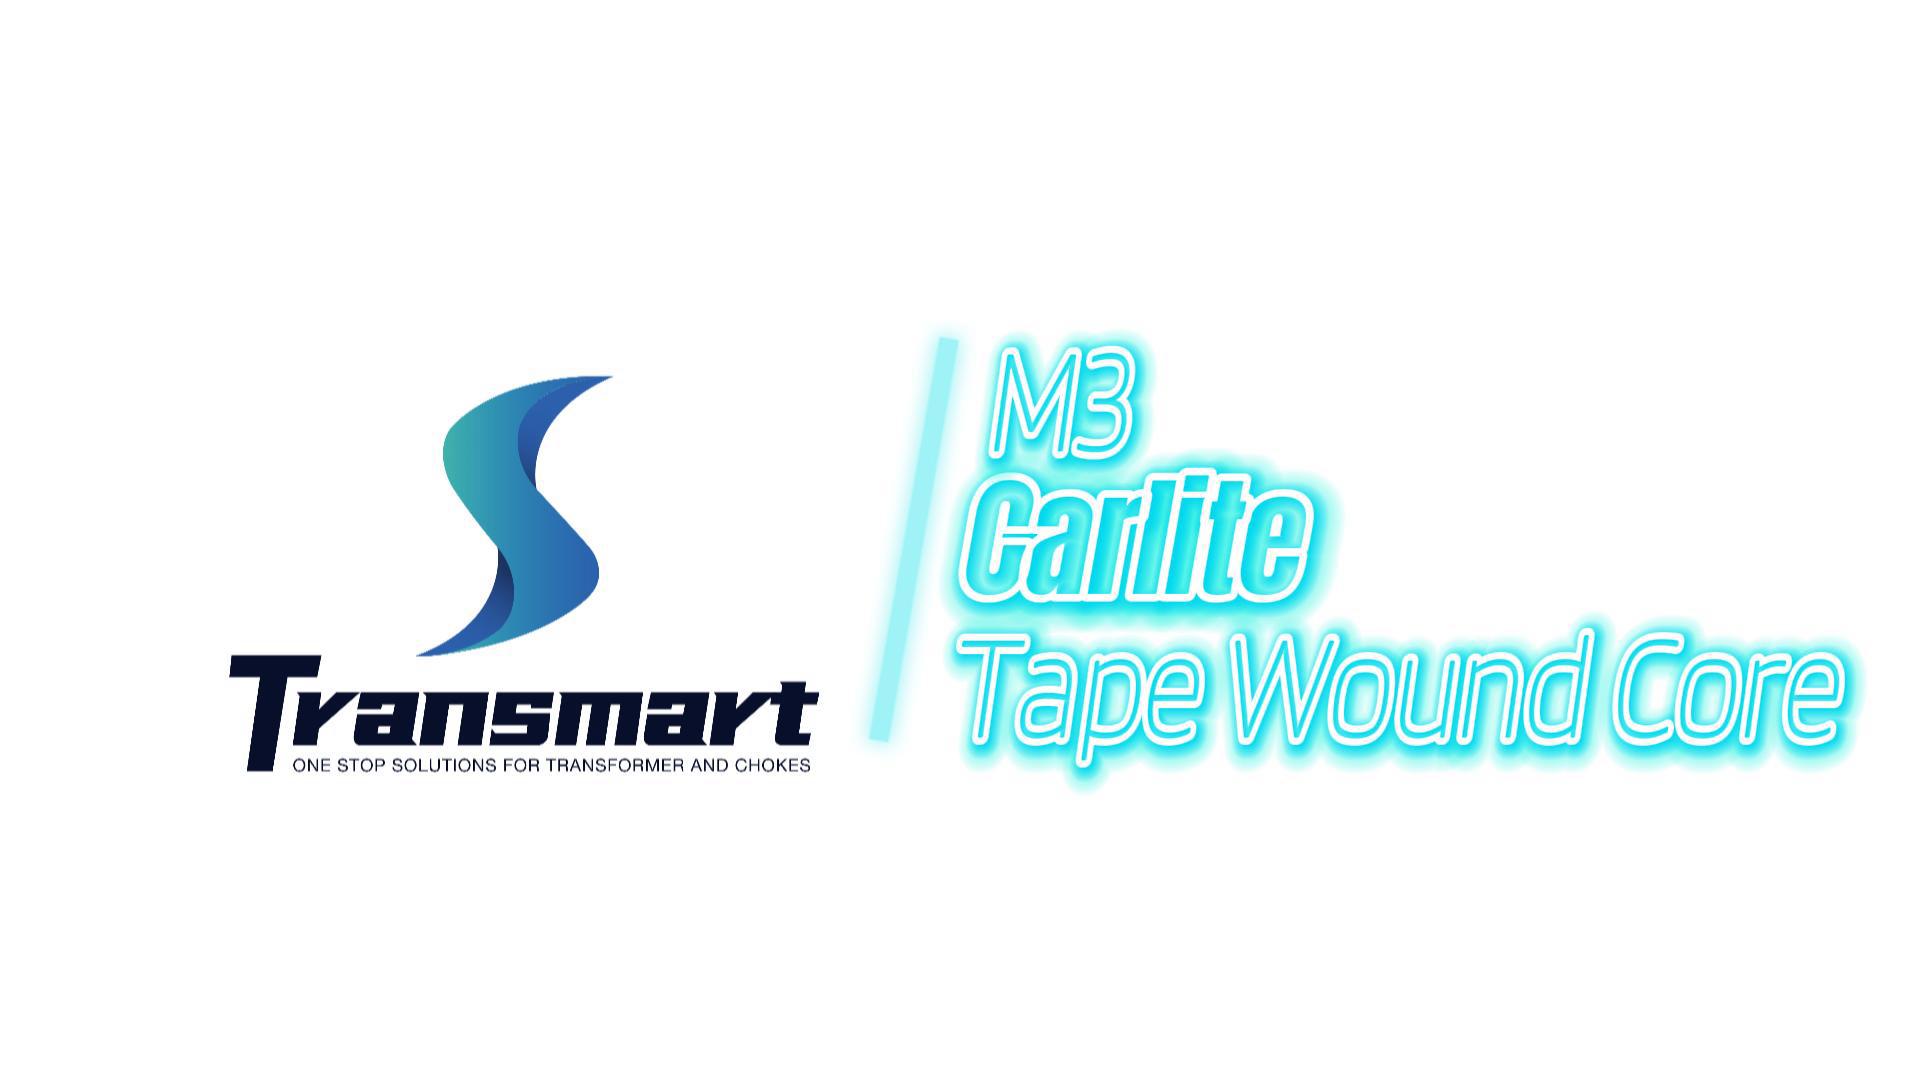 M3 Carlite Tape Wound Core Products | TRANSMART